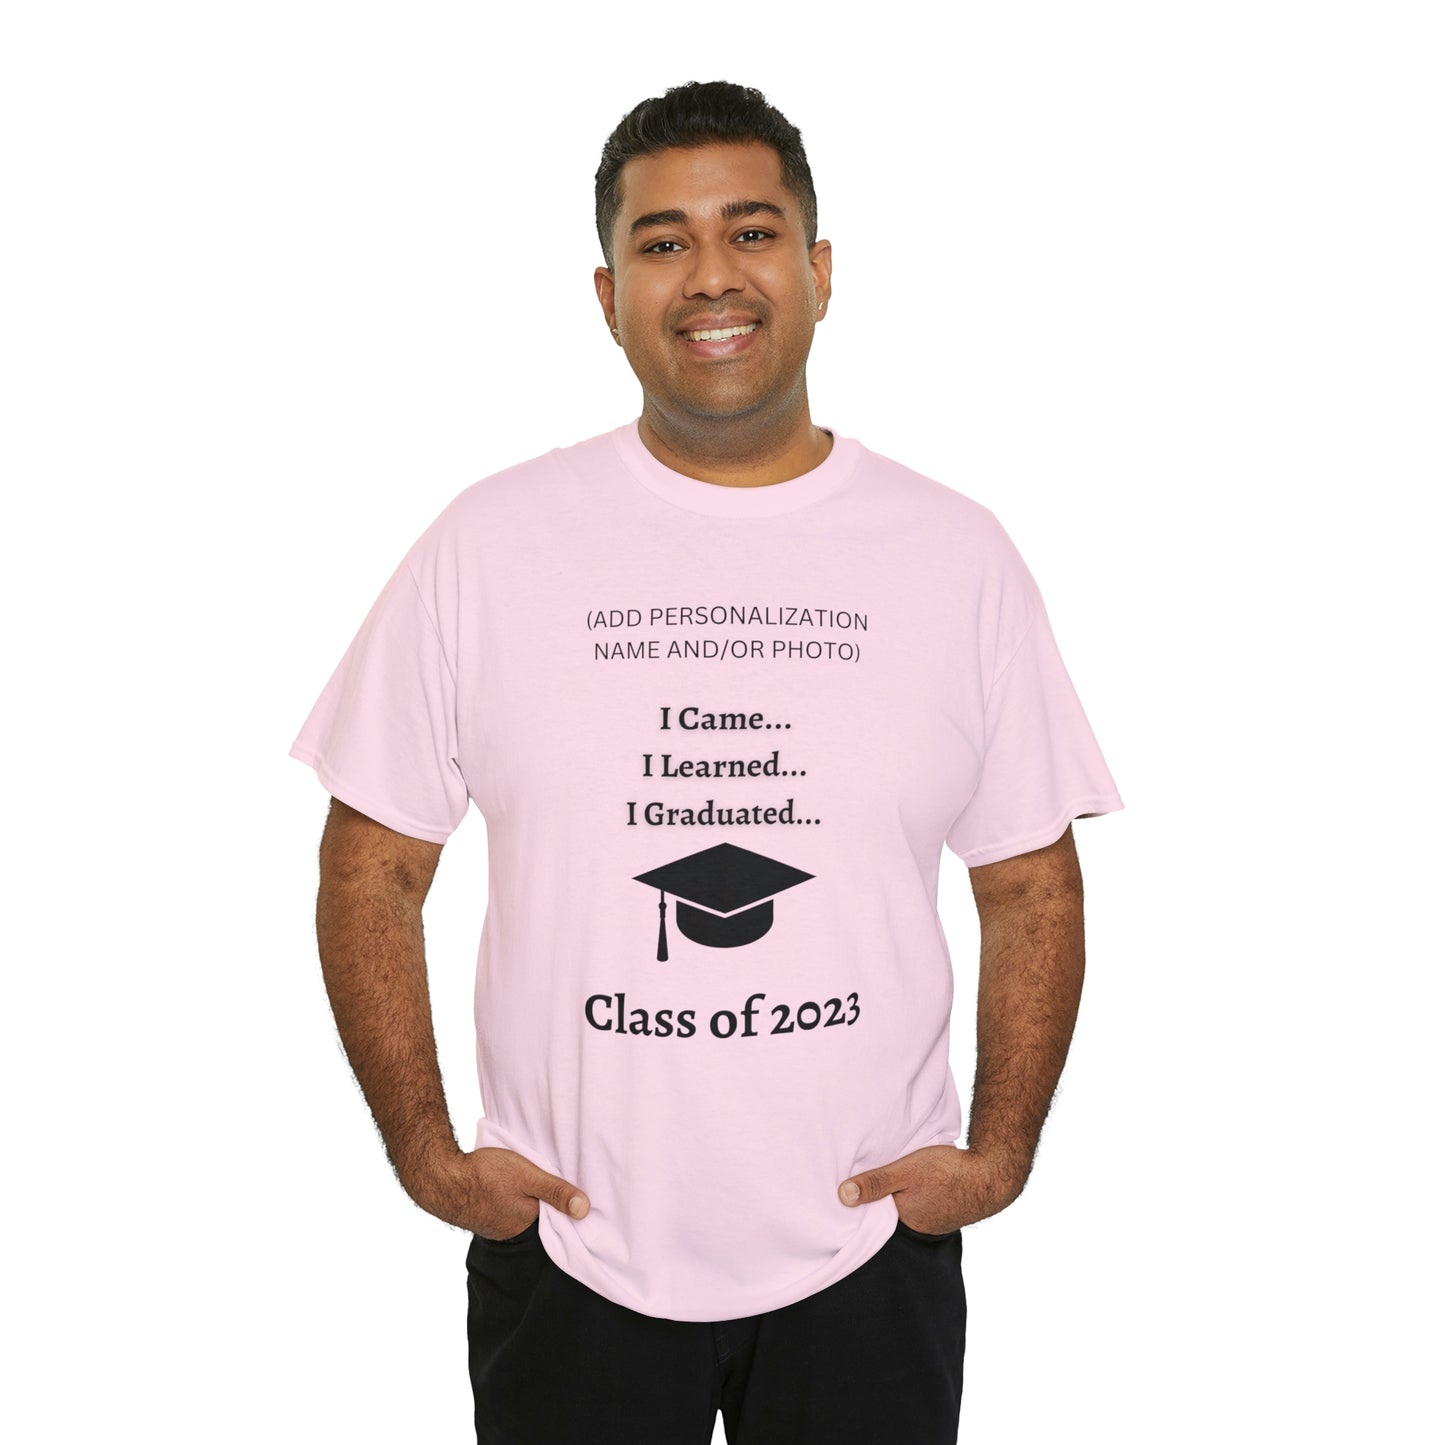 I Came, I Learned, I Graduated T-shirt 2023 Graduation T-shirt (PERSONALIZED)